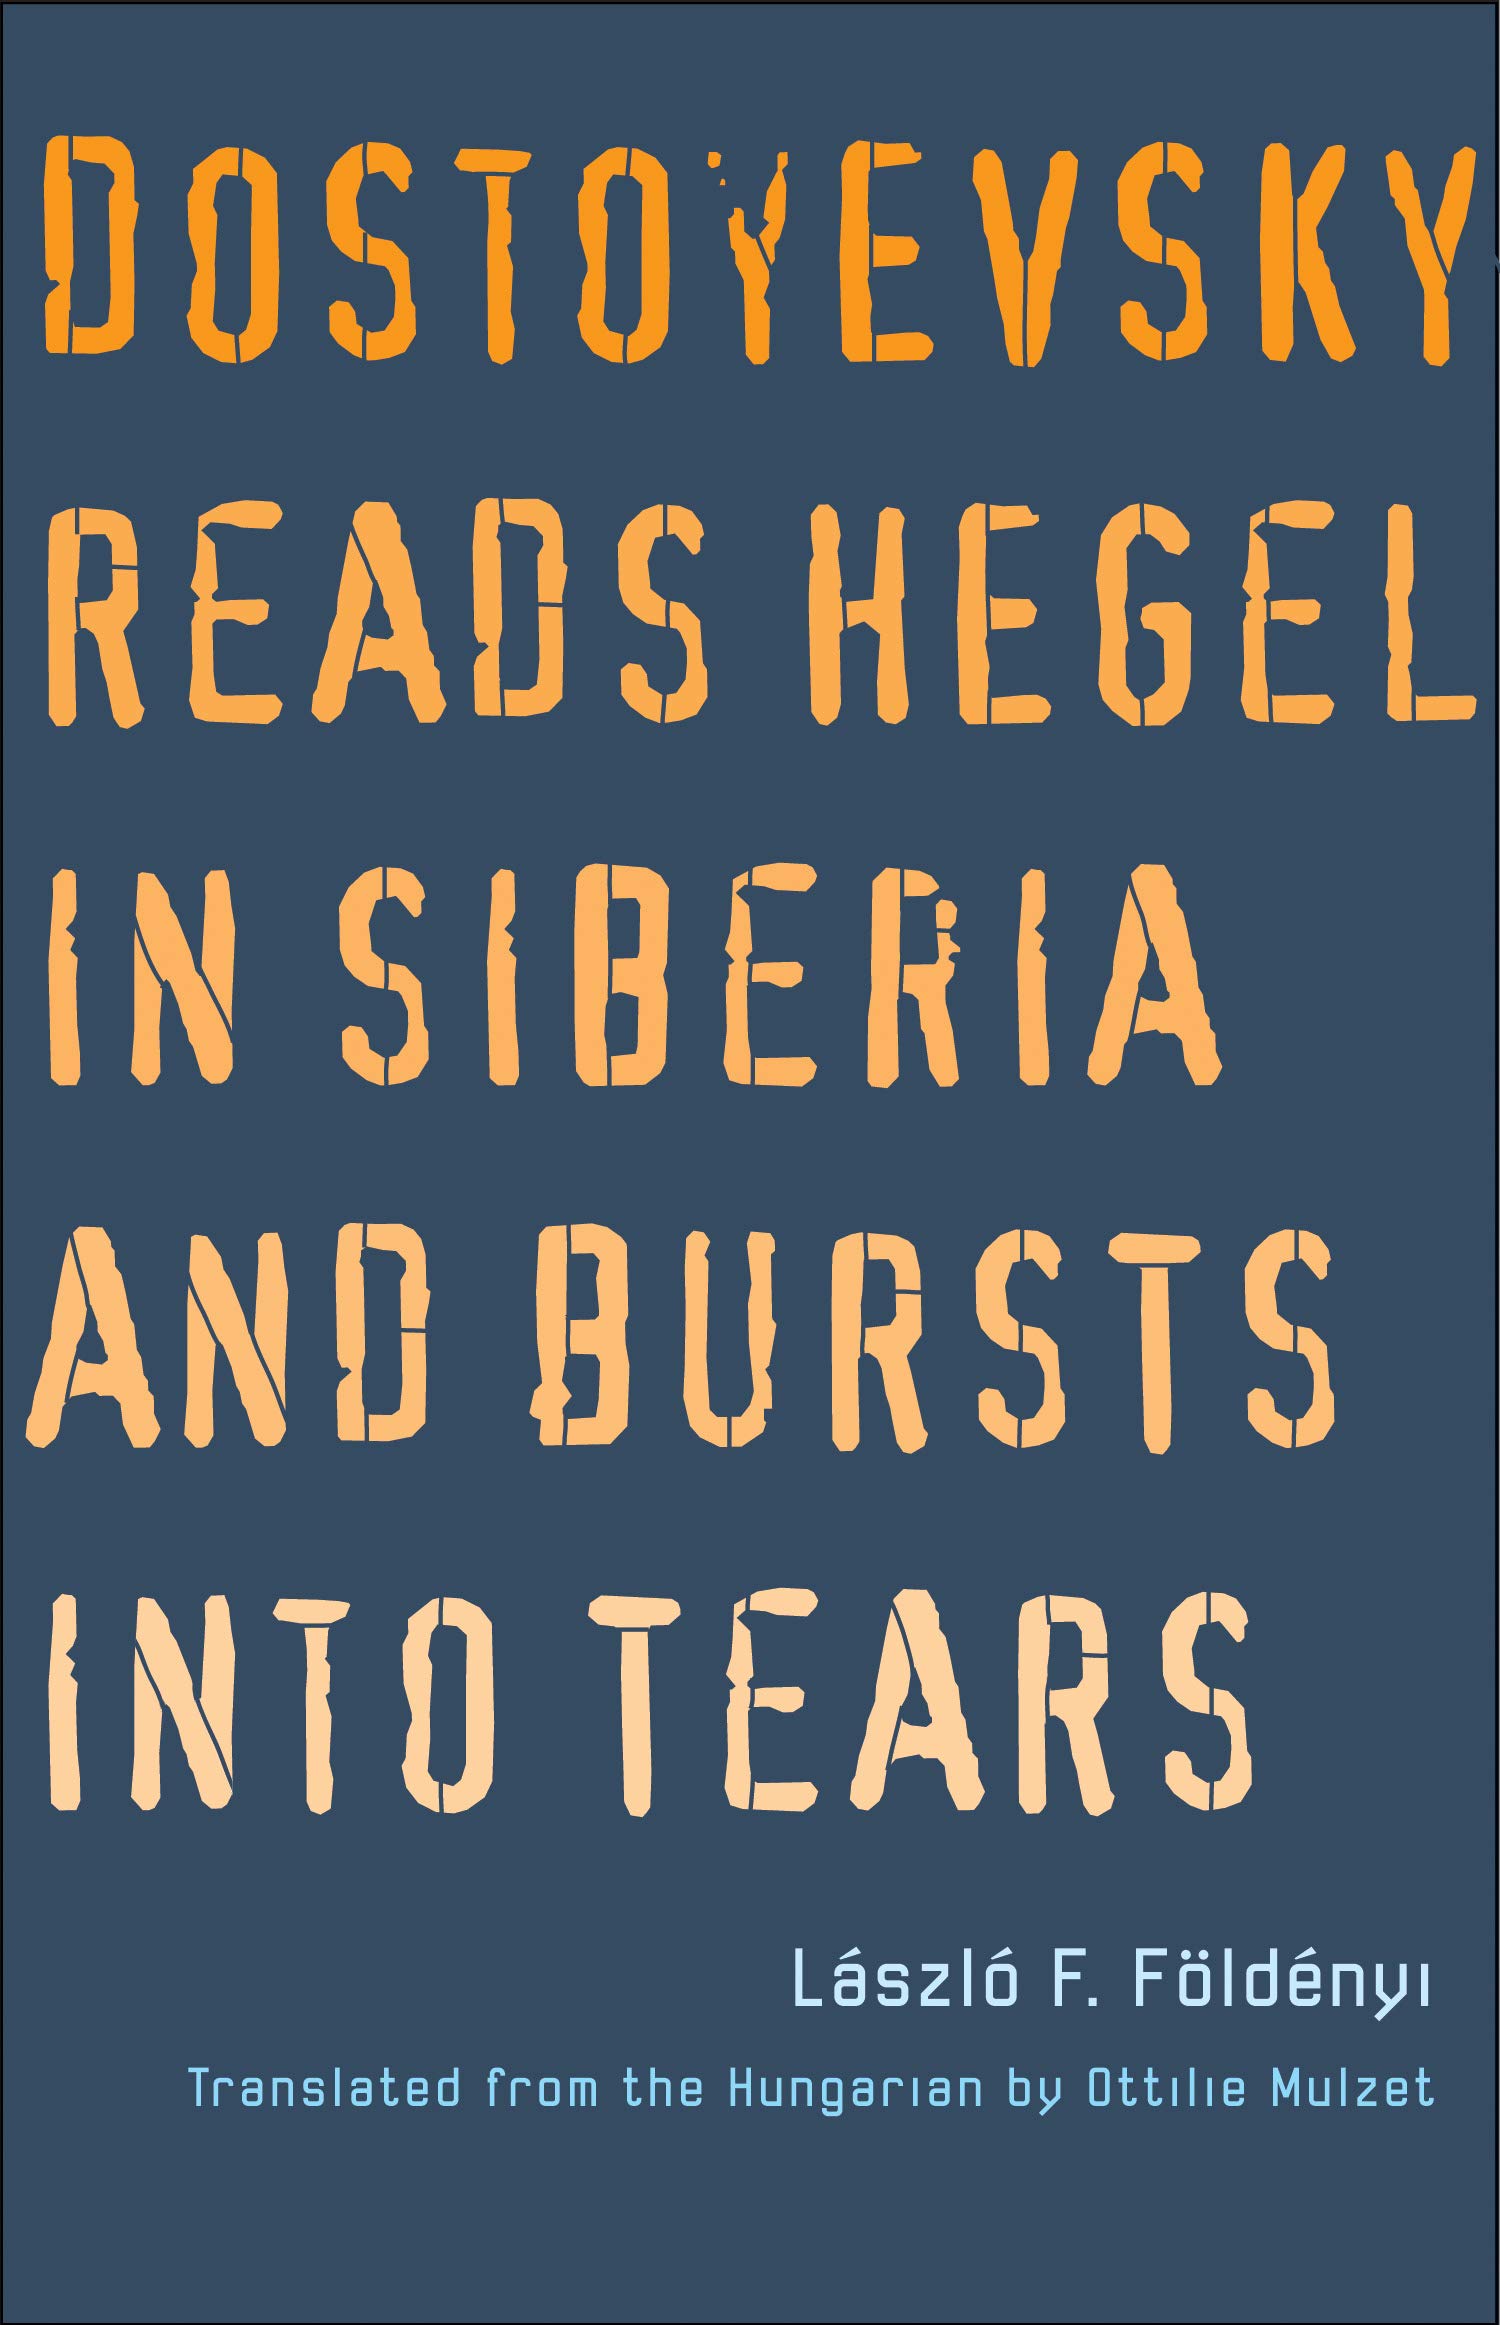 Dostoyevsky Reads Hegel in Siberia and Bursts Into Tears | Laszlo F. Foldenyi image21